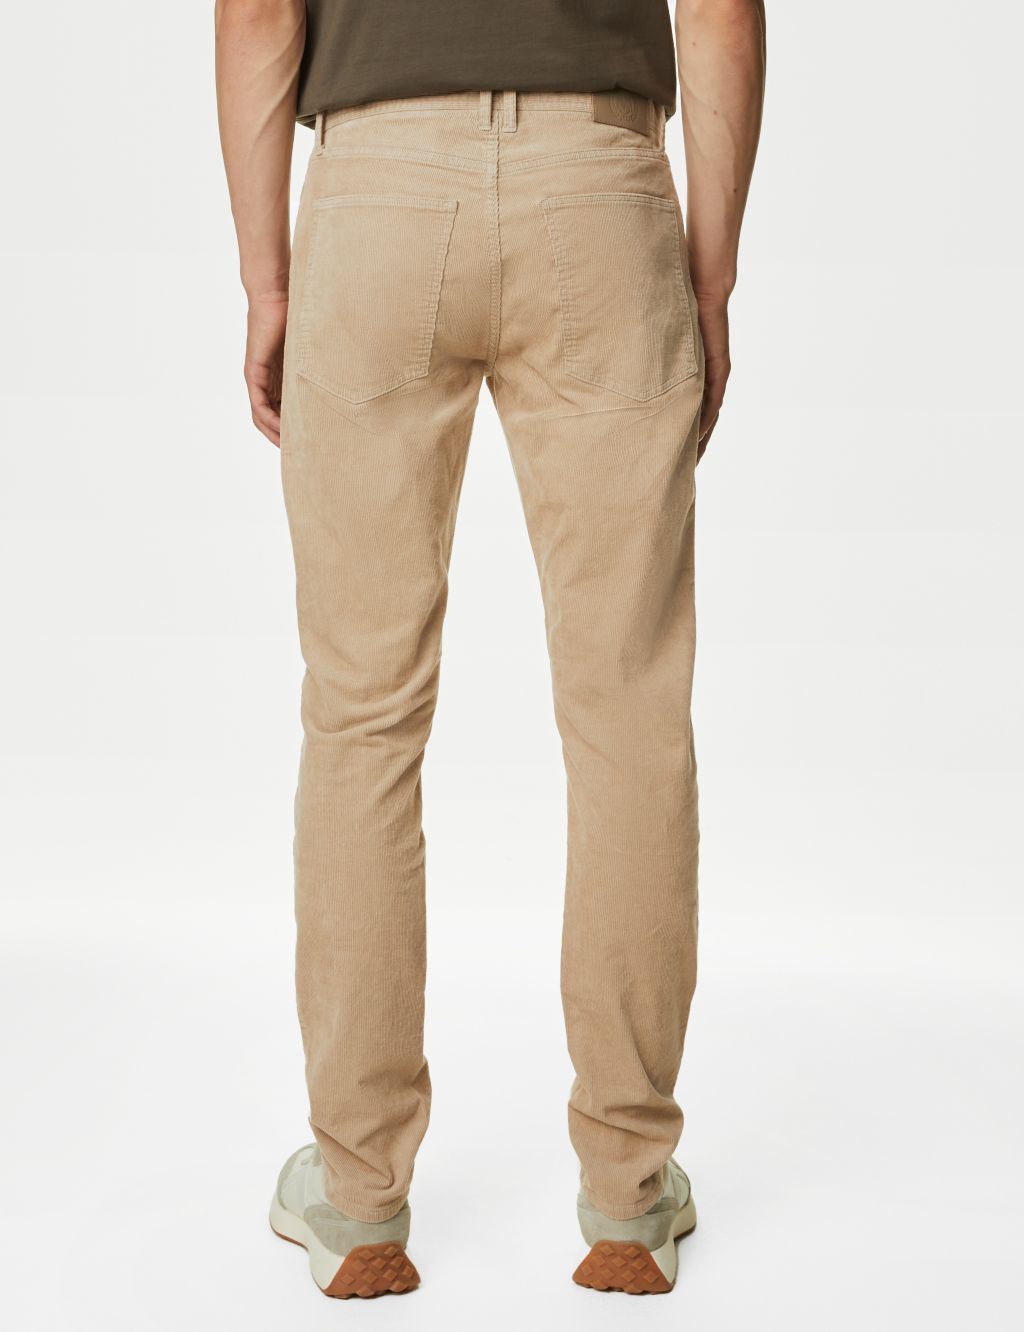 Slim Fit Corduroy 5 Pocket Trousers image 5